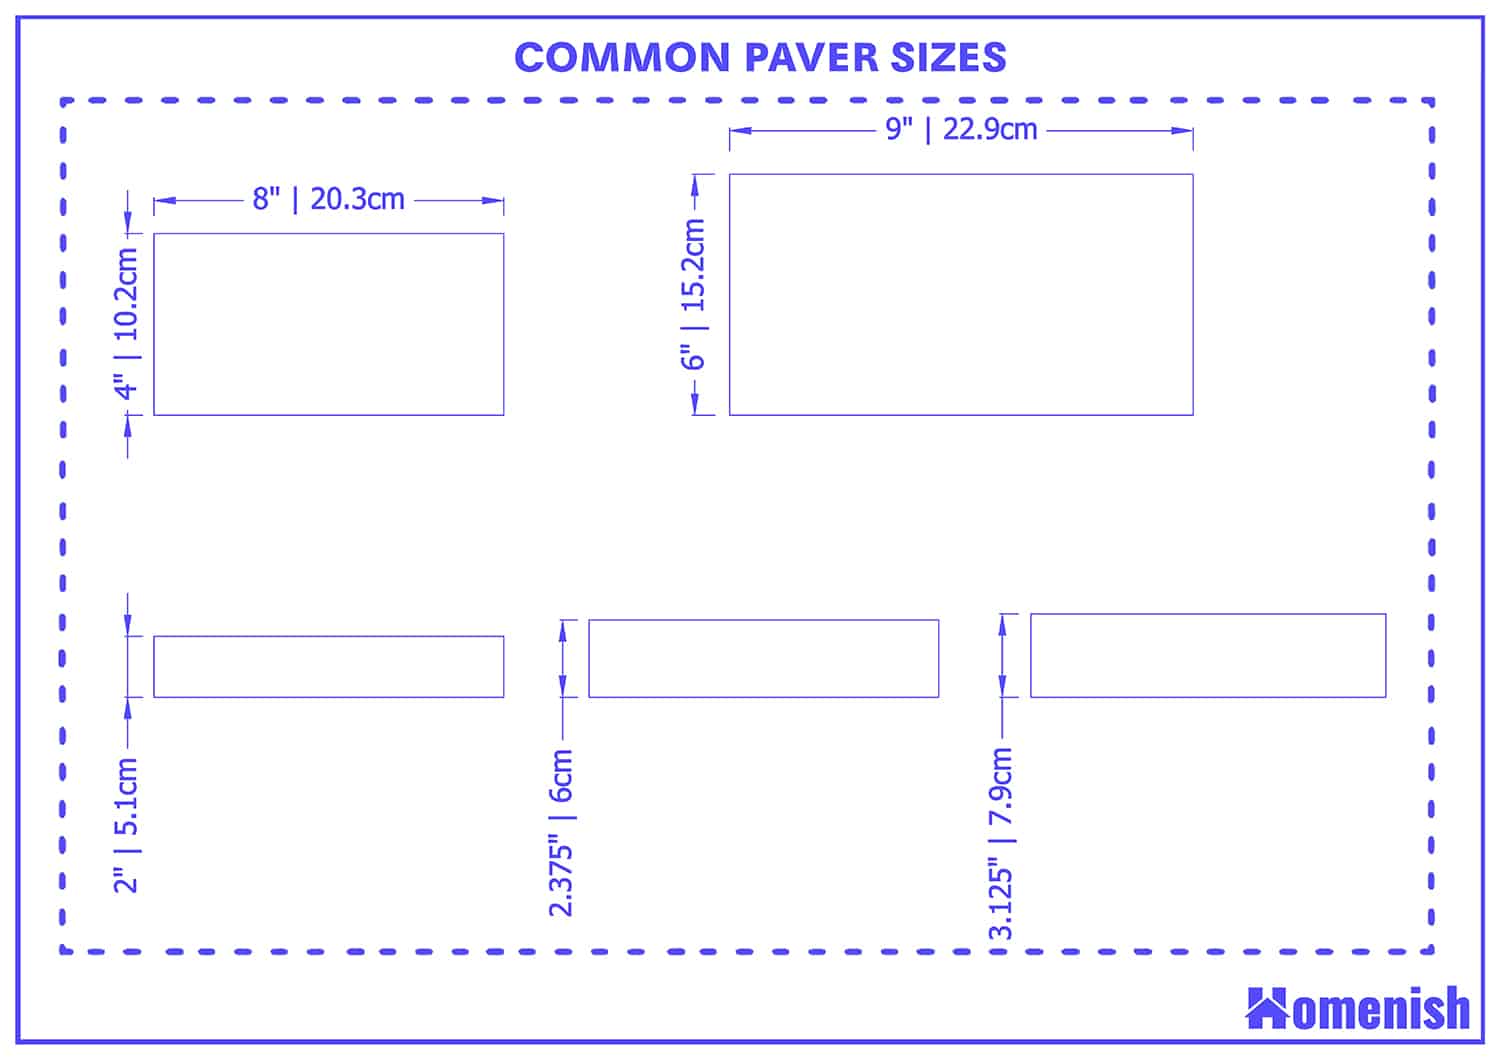 Common paver sizes